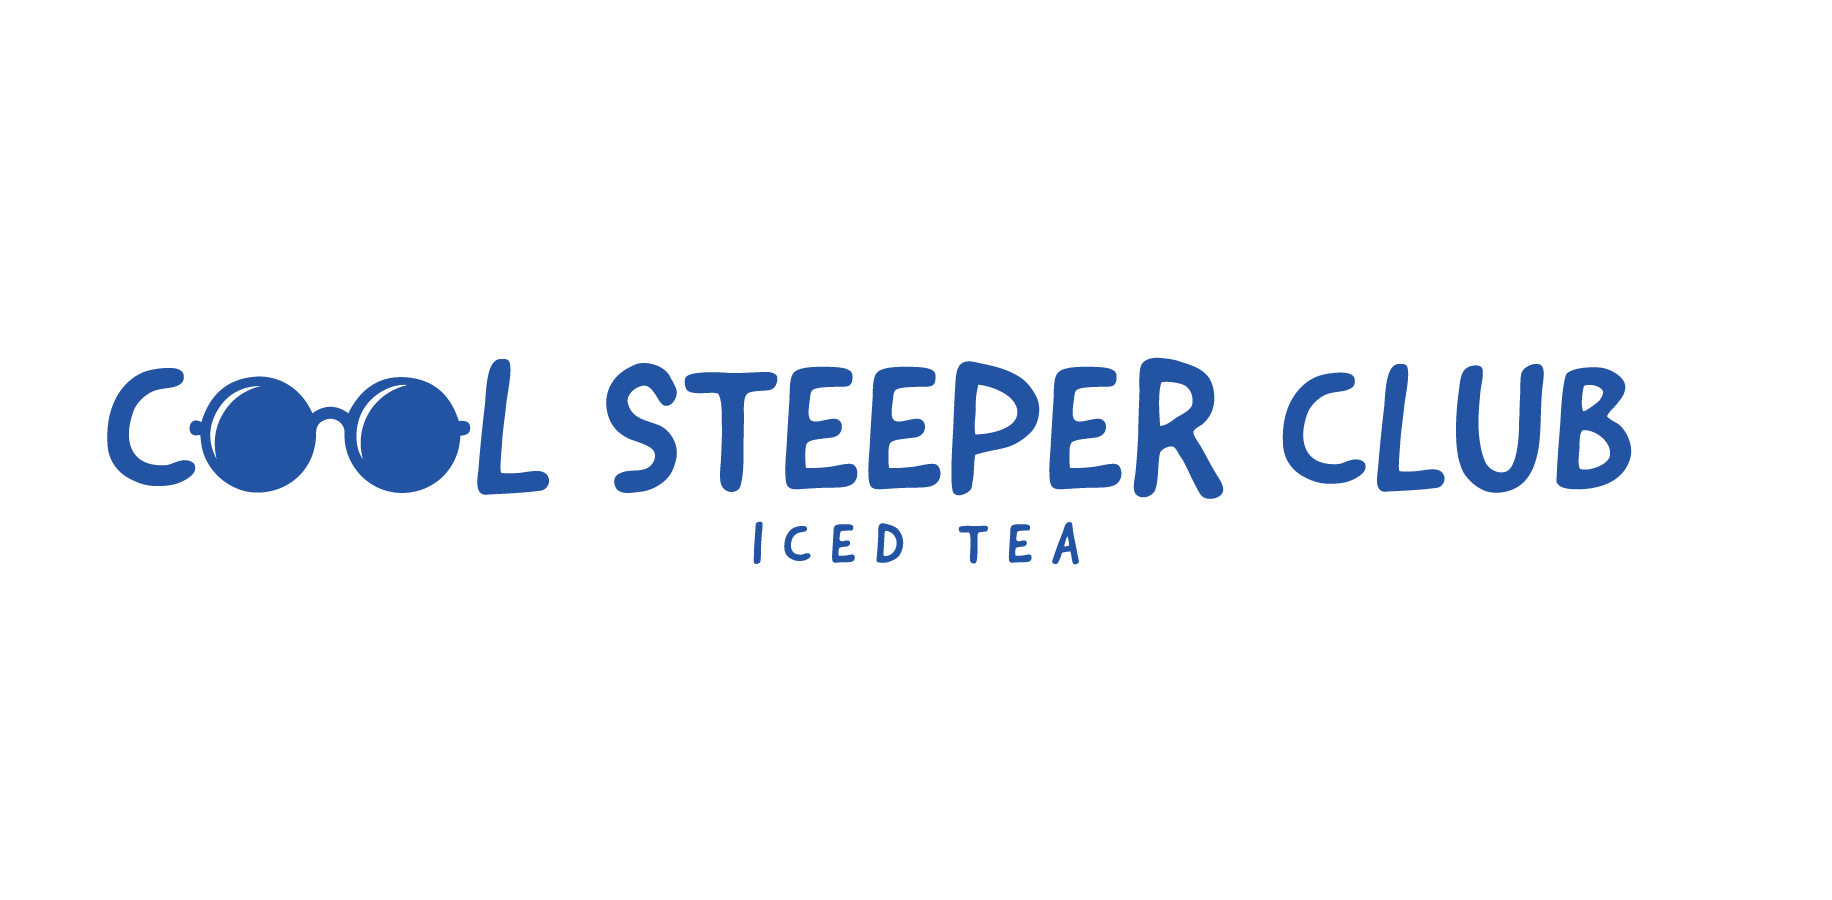 Cool Steeper Club